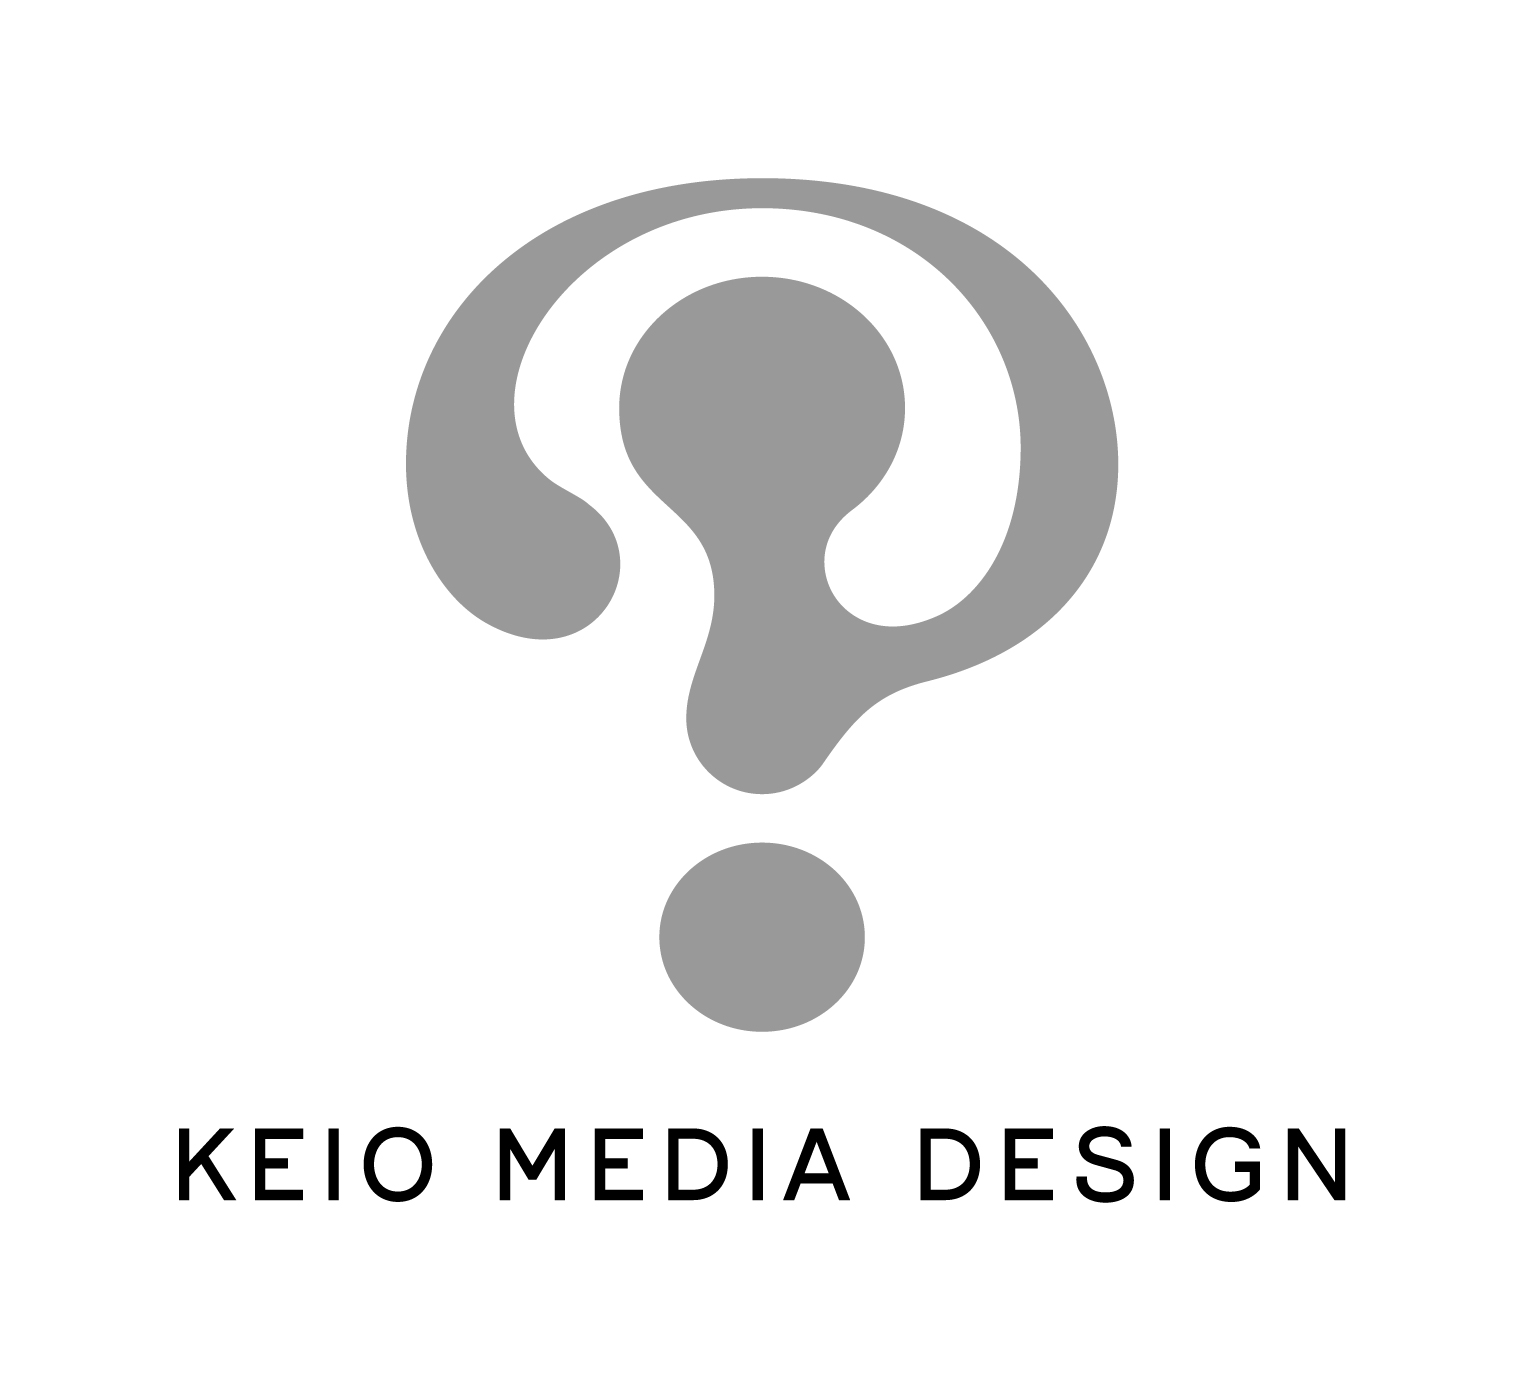 Keio University Graduate School of Media Design (KMD)